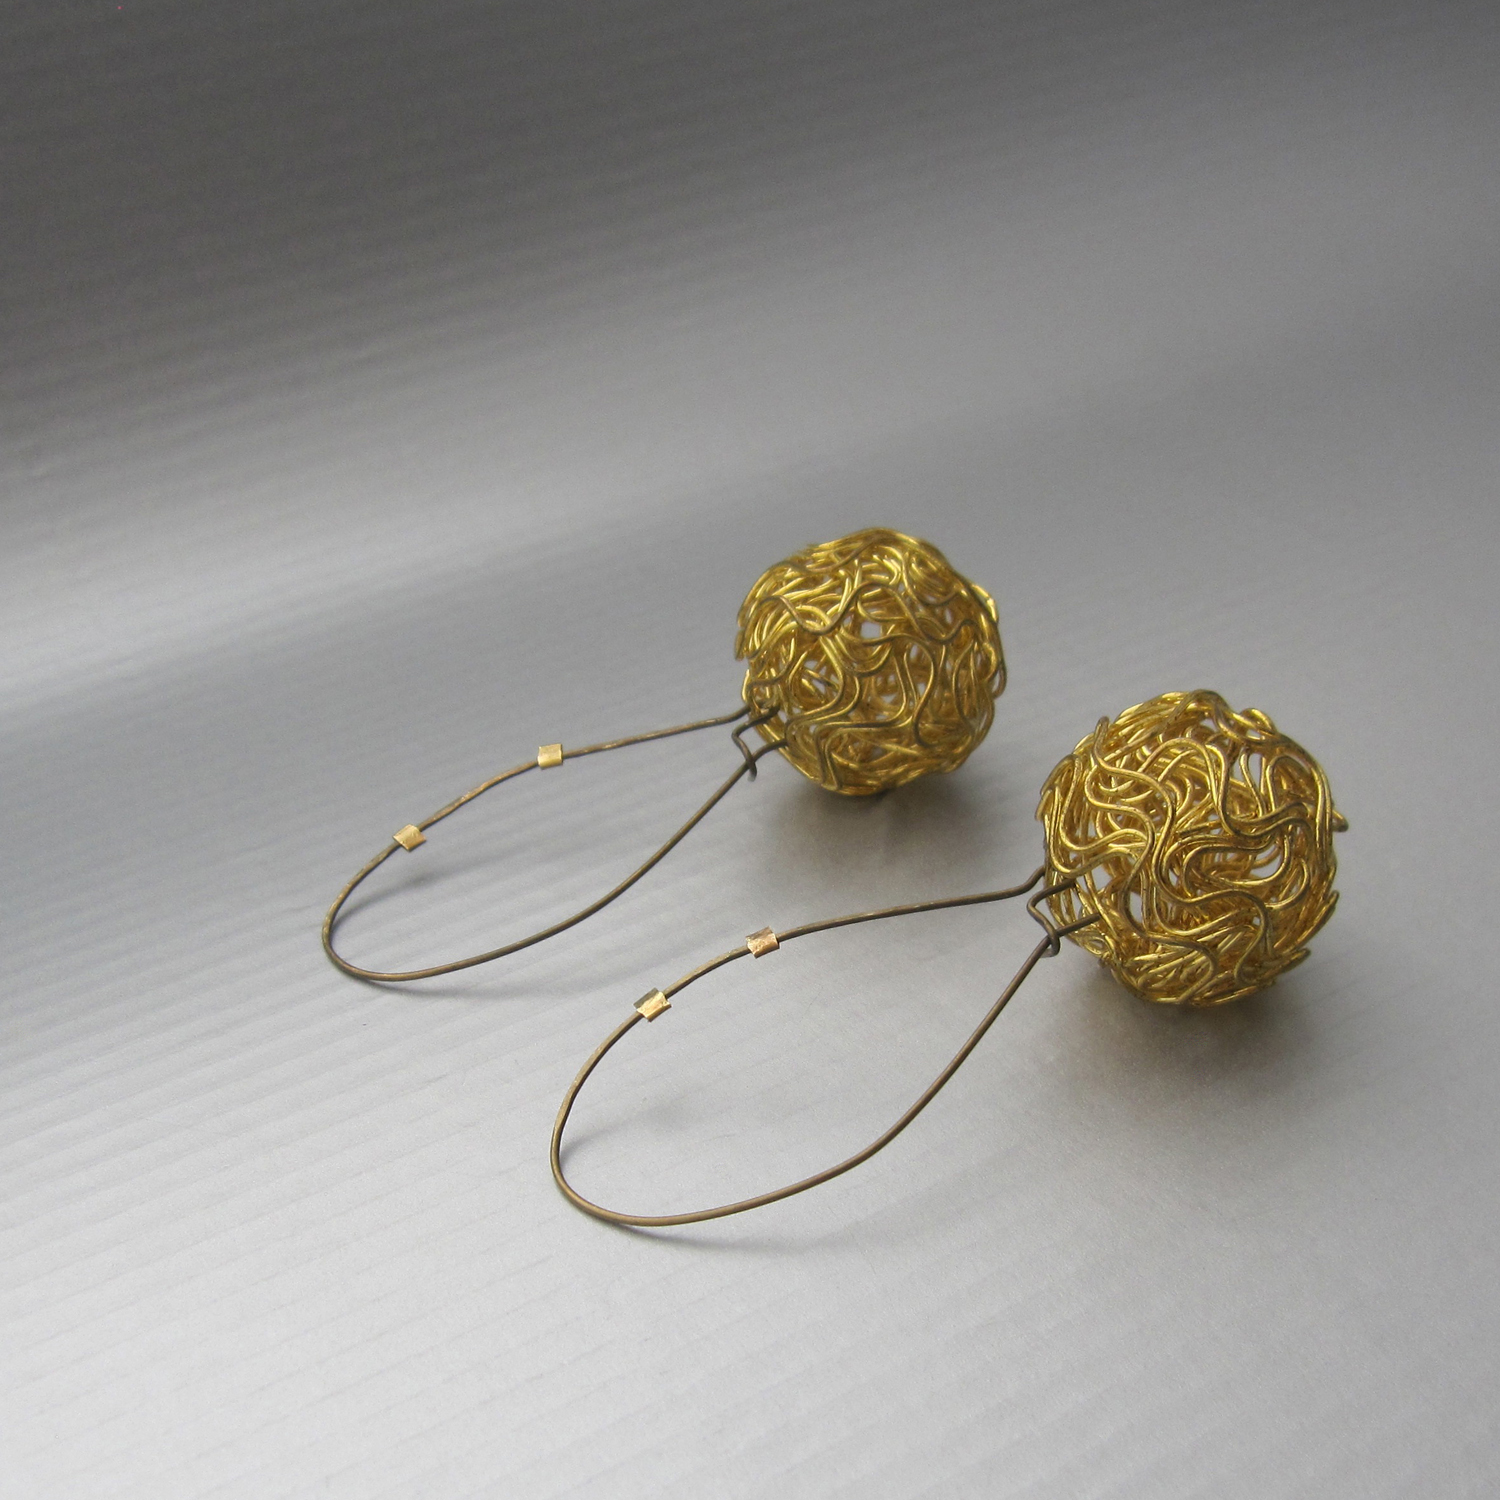  nido earrings in reclaimed bronze and brass (2.5 in in length) 